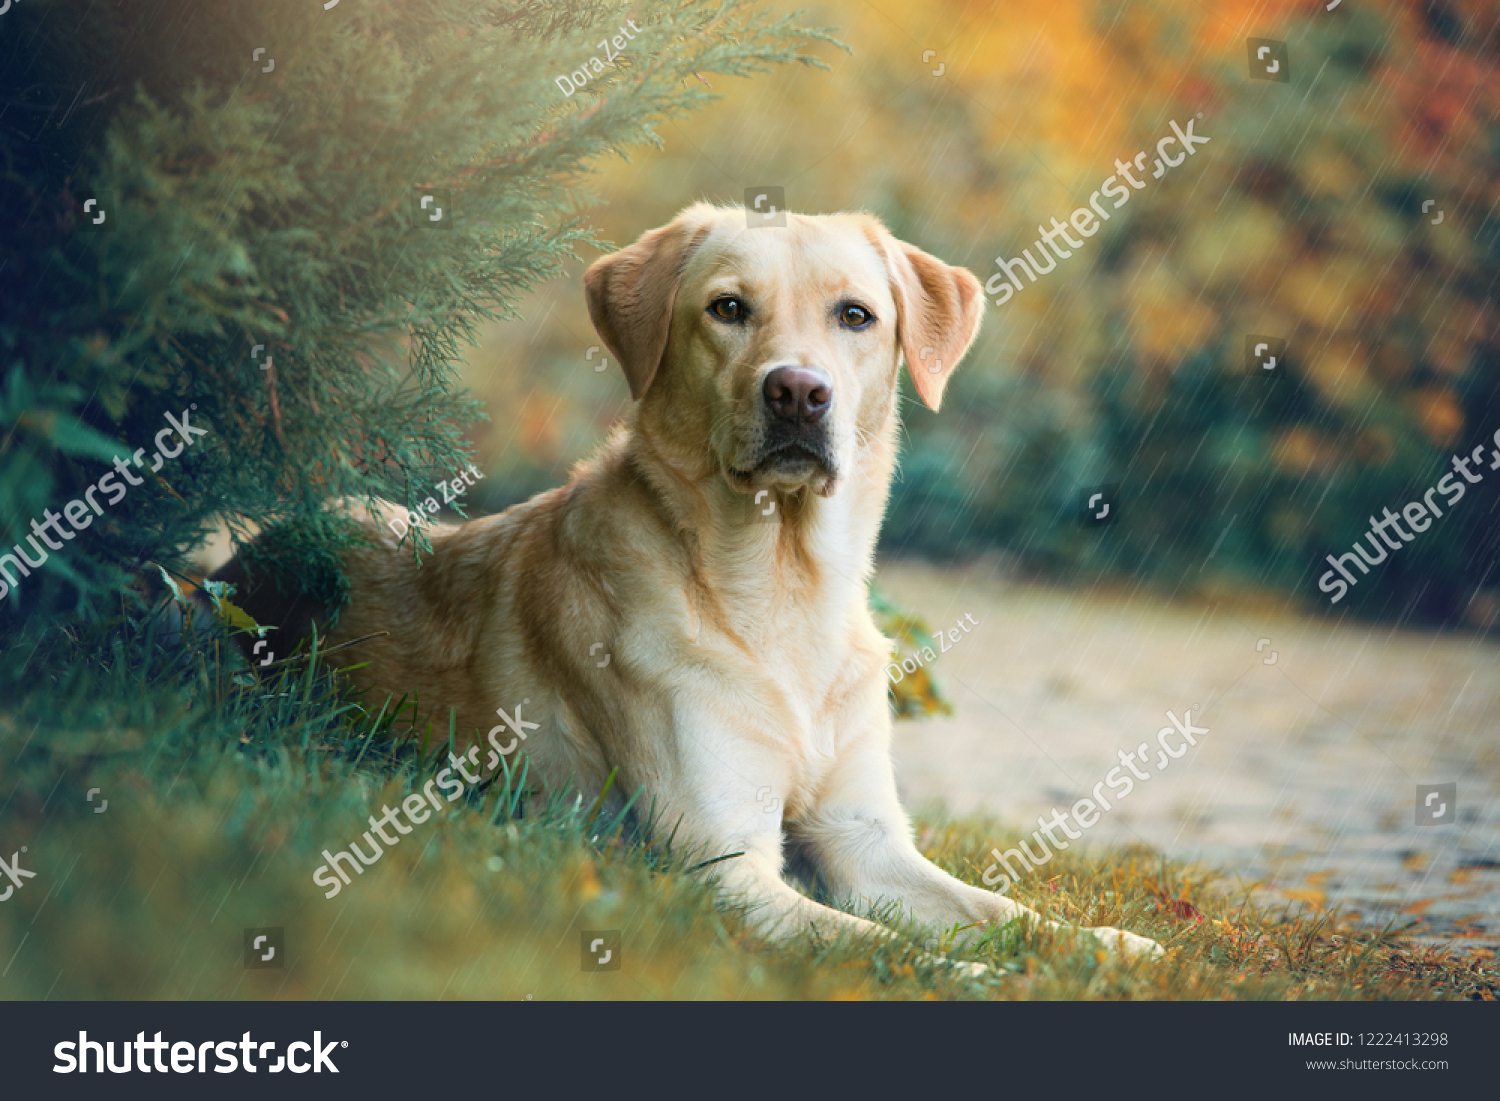 Labrador retriever dog lying under a tree in the rain #1222413298